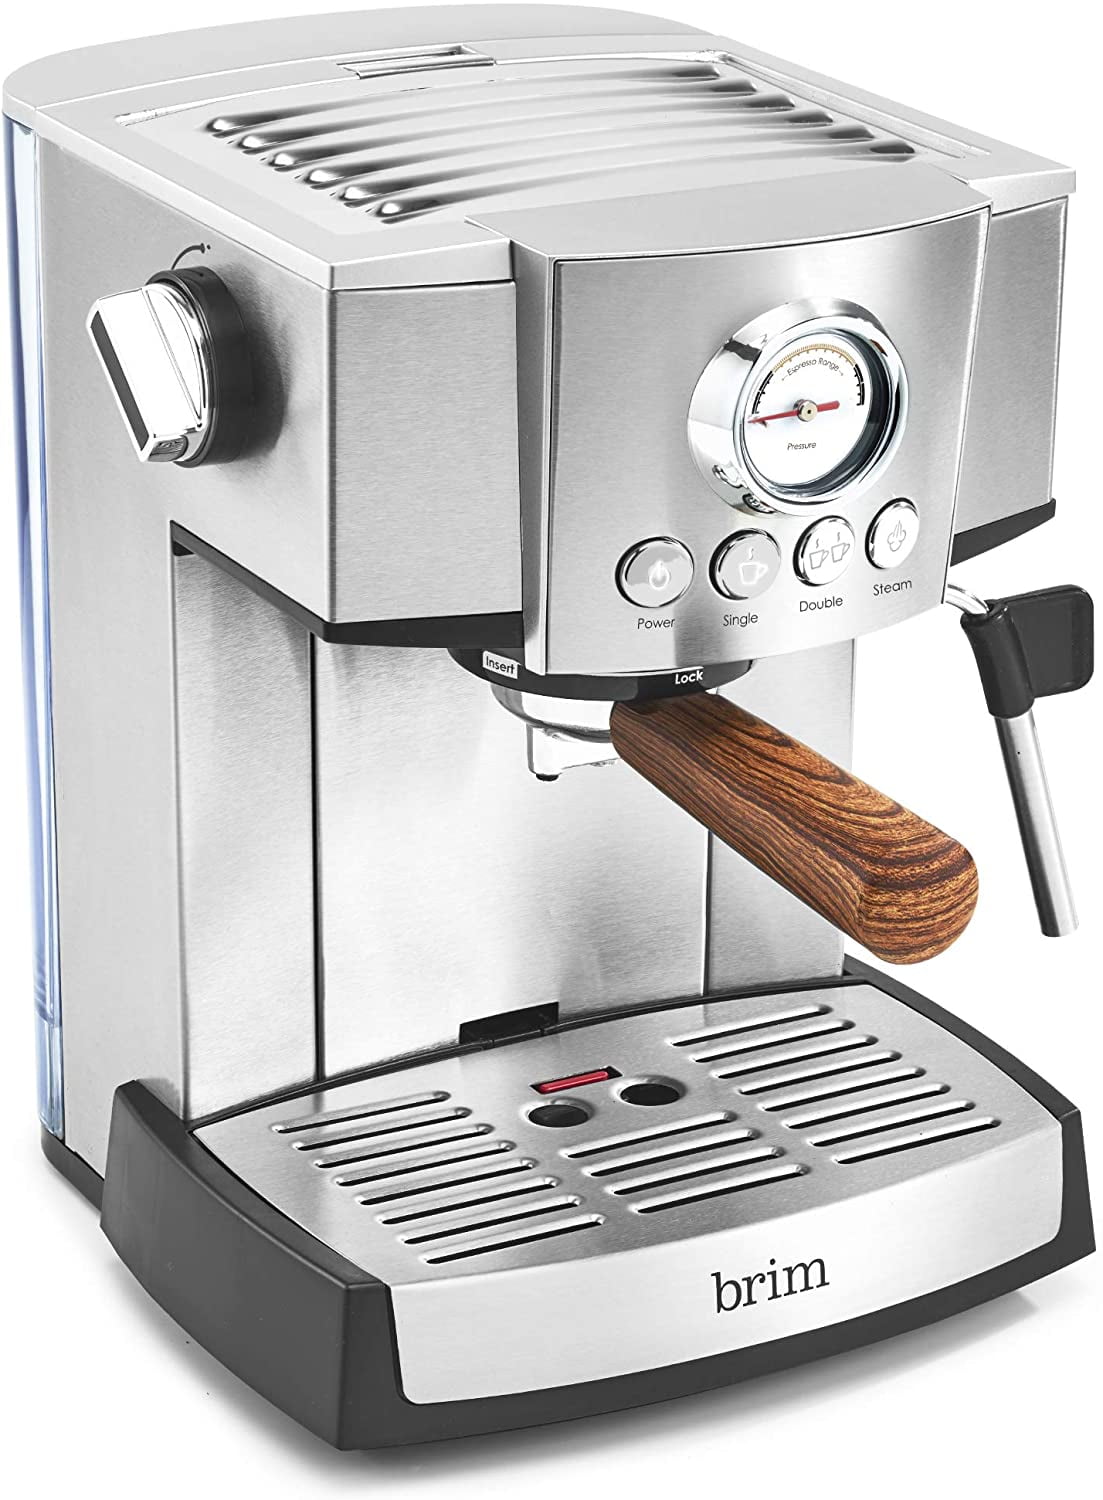 Brim 50030 Espresso Maker